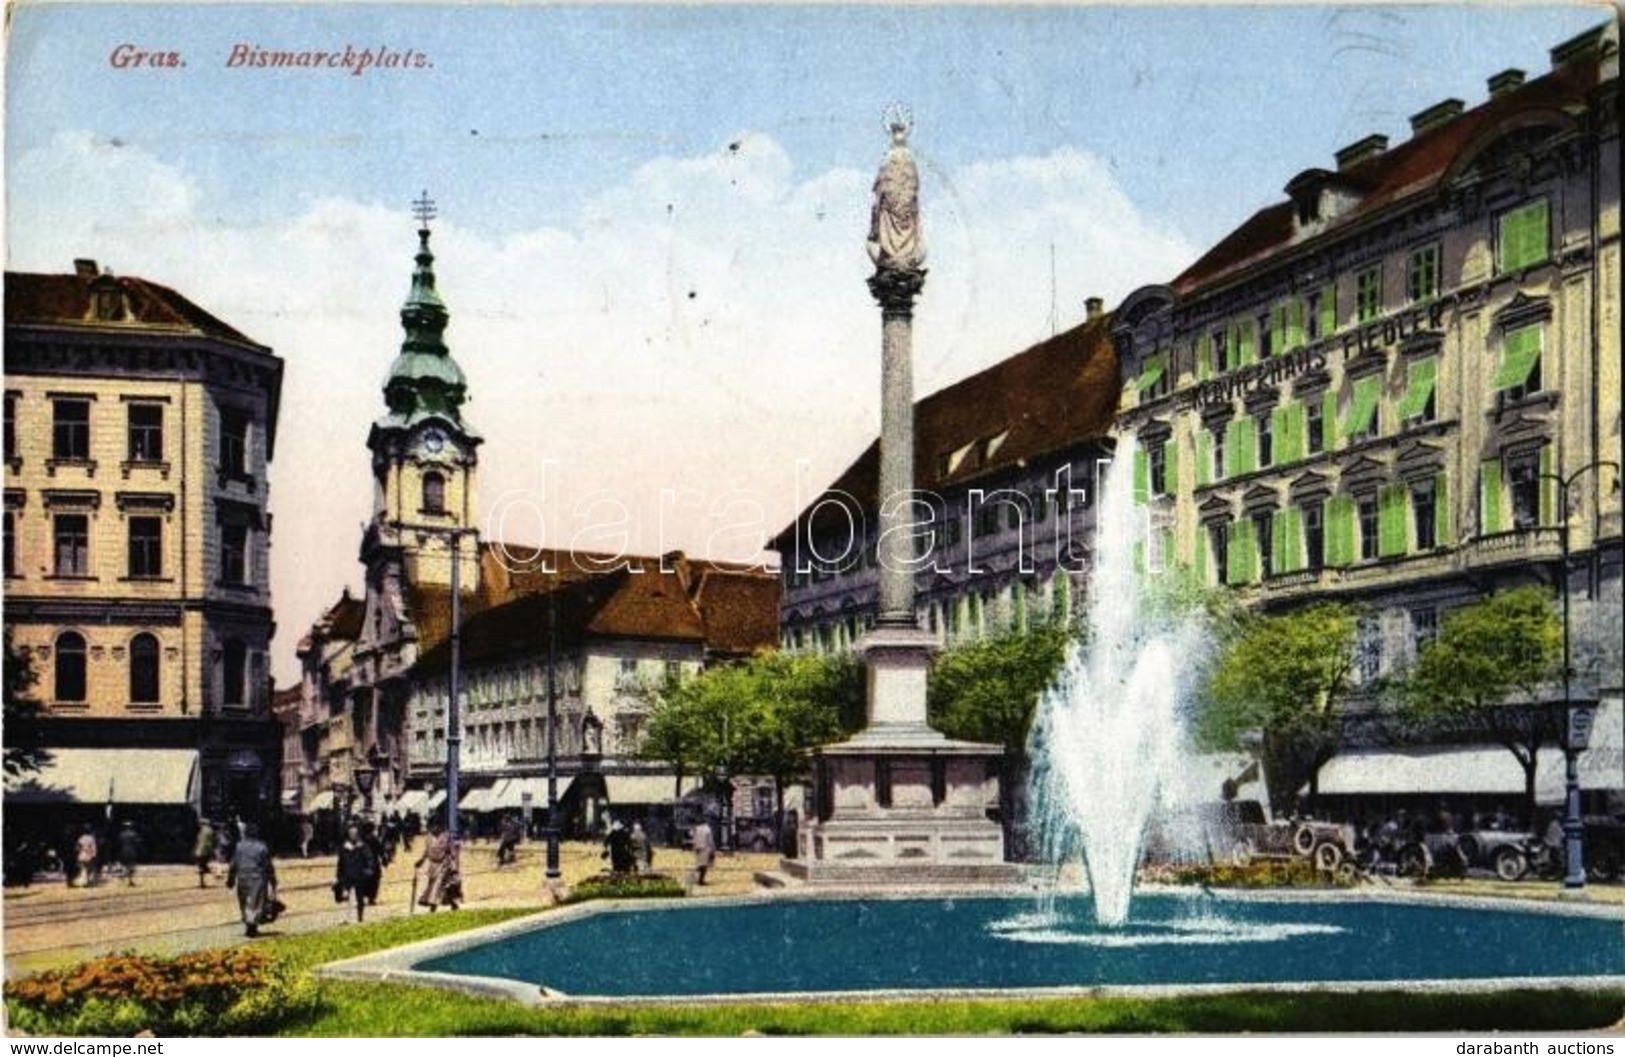 T2 1930 Graz, Bismarckplatz, Klavierhaus Fiedler / Square, Fountain, Automobiles, Piano House Fiedler - Unclassified